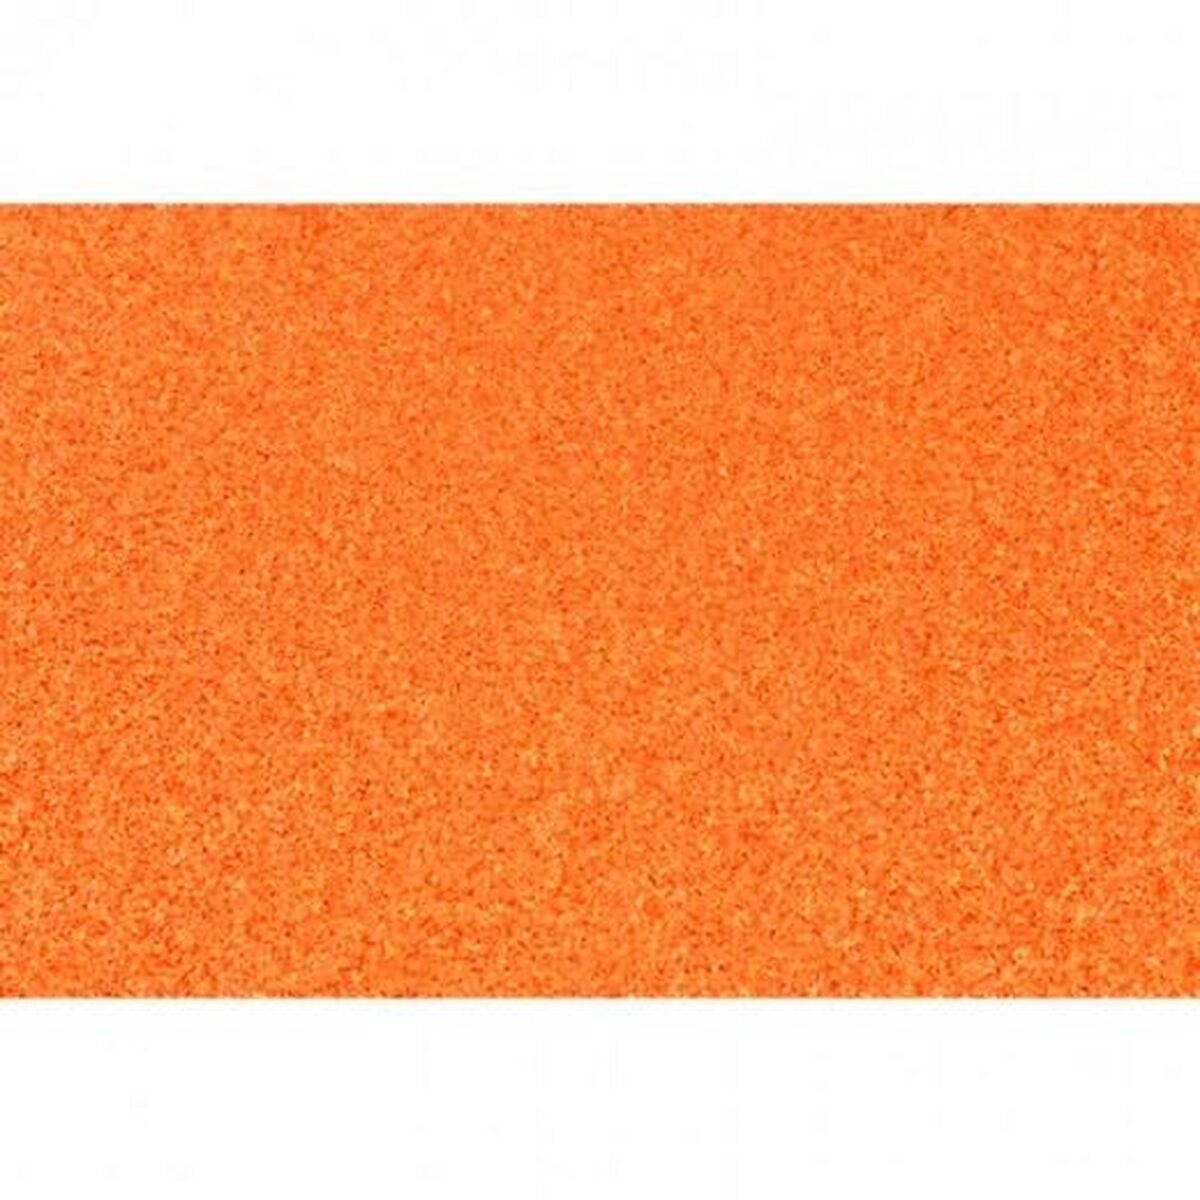 Gomma Eva Fama Porporina Arancio 50 x 70 cm (10 Pezzi)